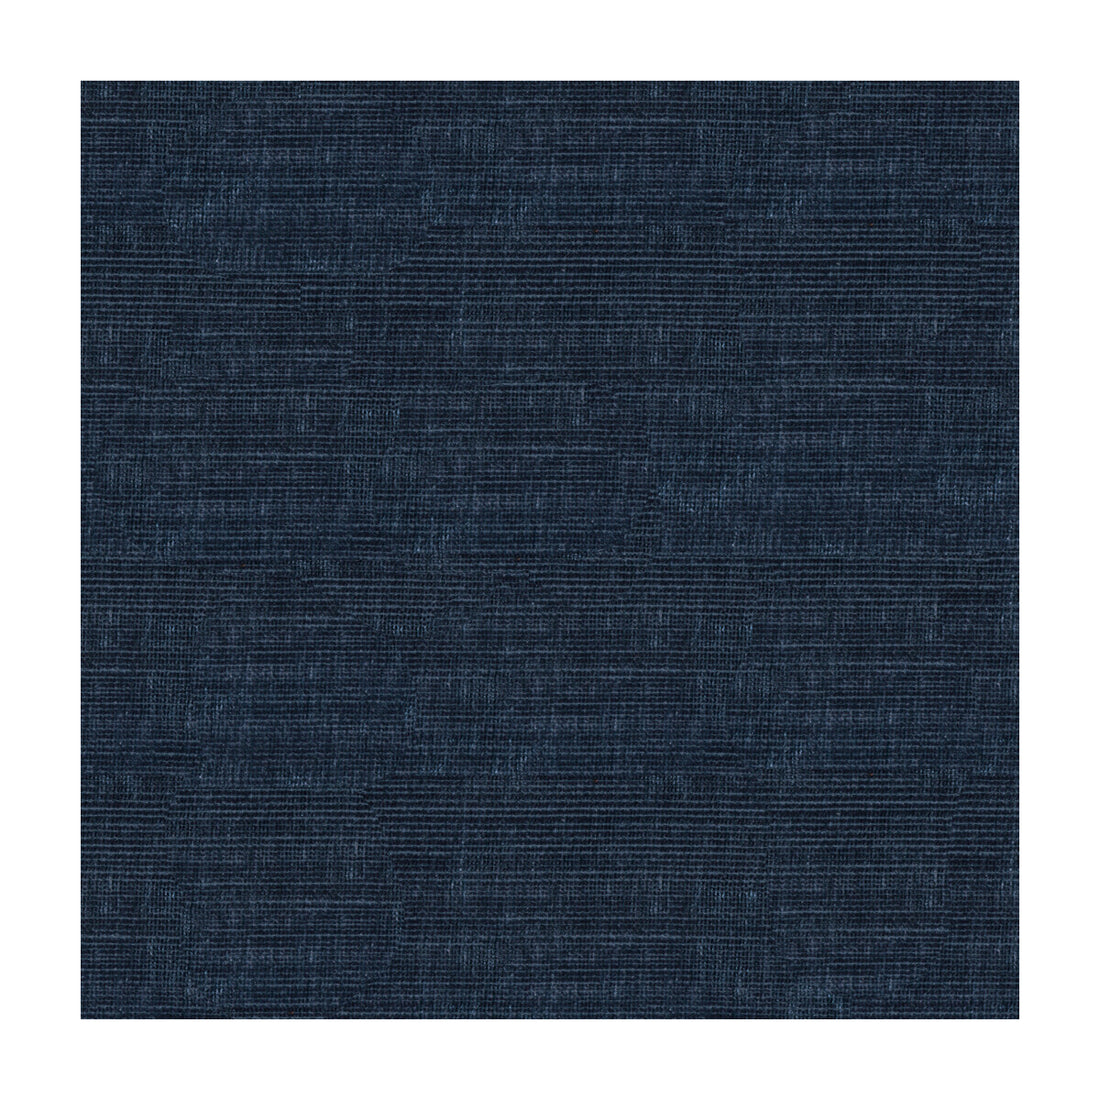 Kravet Smart fabric in 34191-50 color - pattern 34191.50.0 - by Kravet Smart